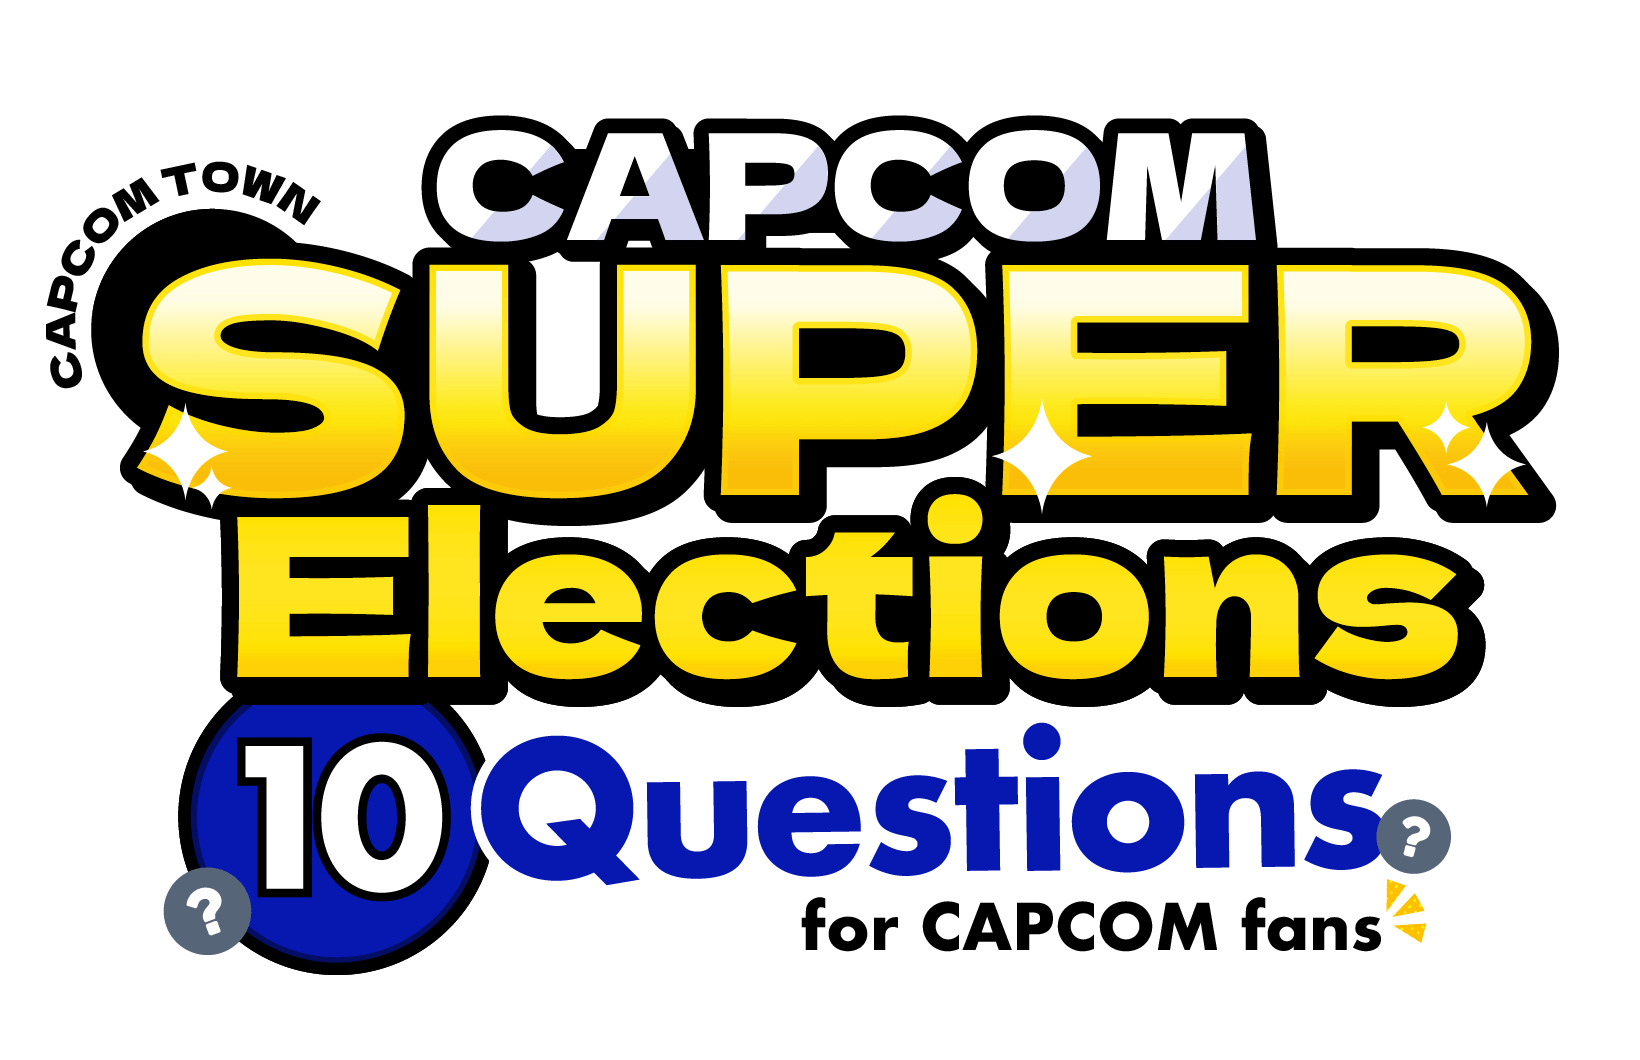 Capcom-Super-Abstimmung: Zehn Fragen für Capcom-Fans!